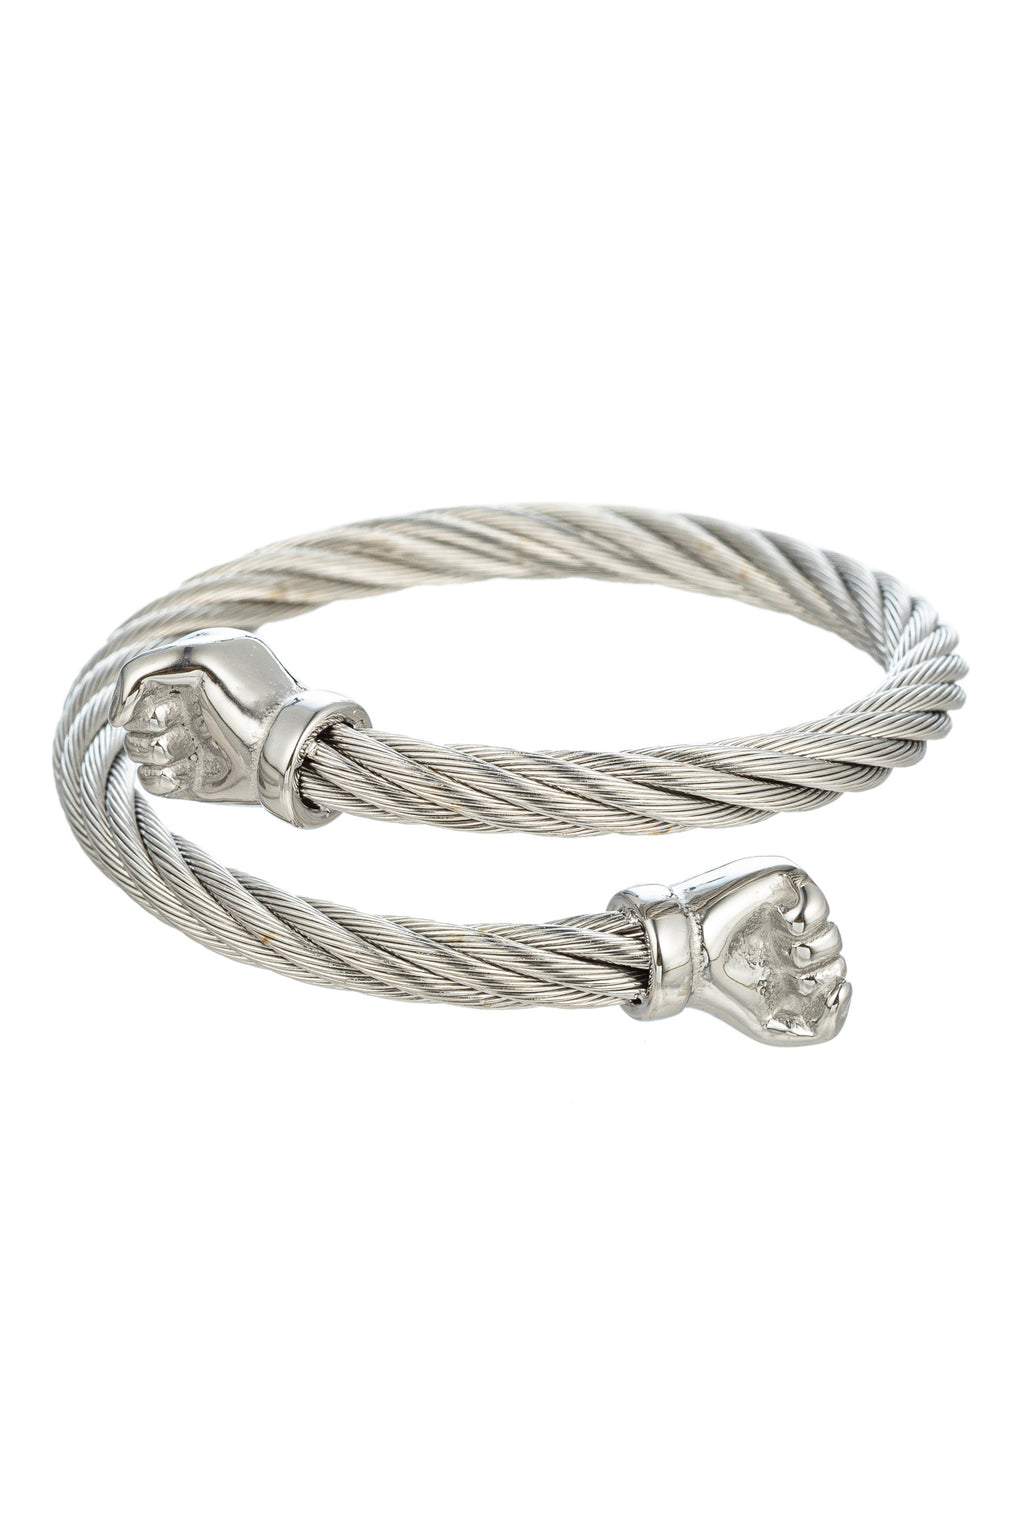 Silver tone titanium fist pendant cuff bracelet.